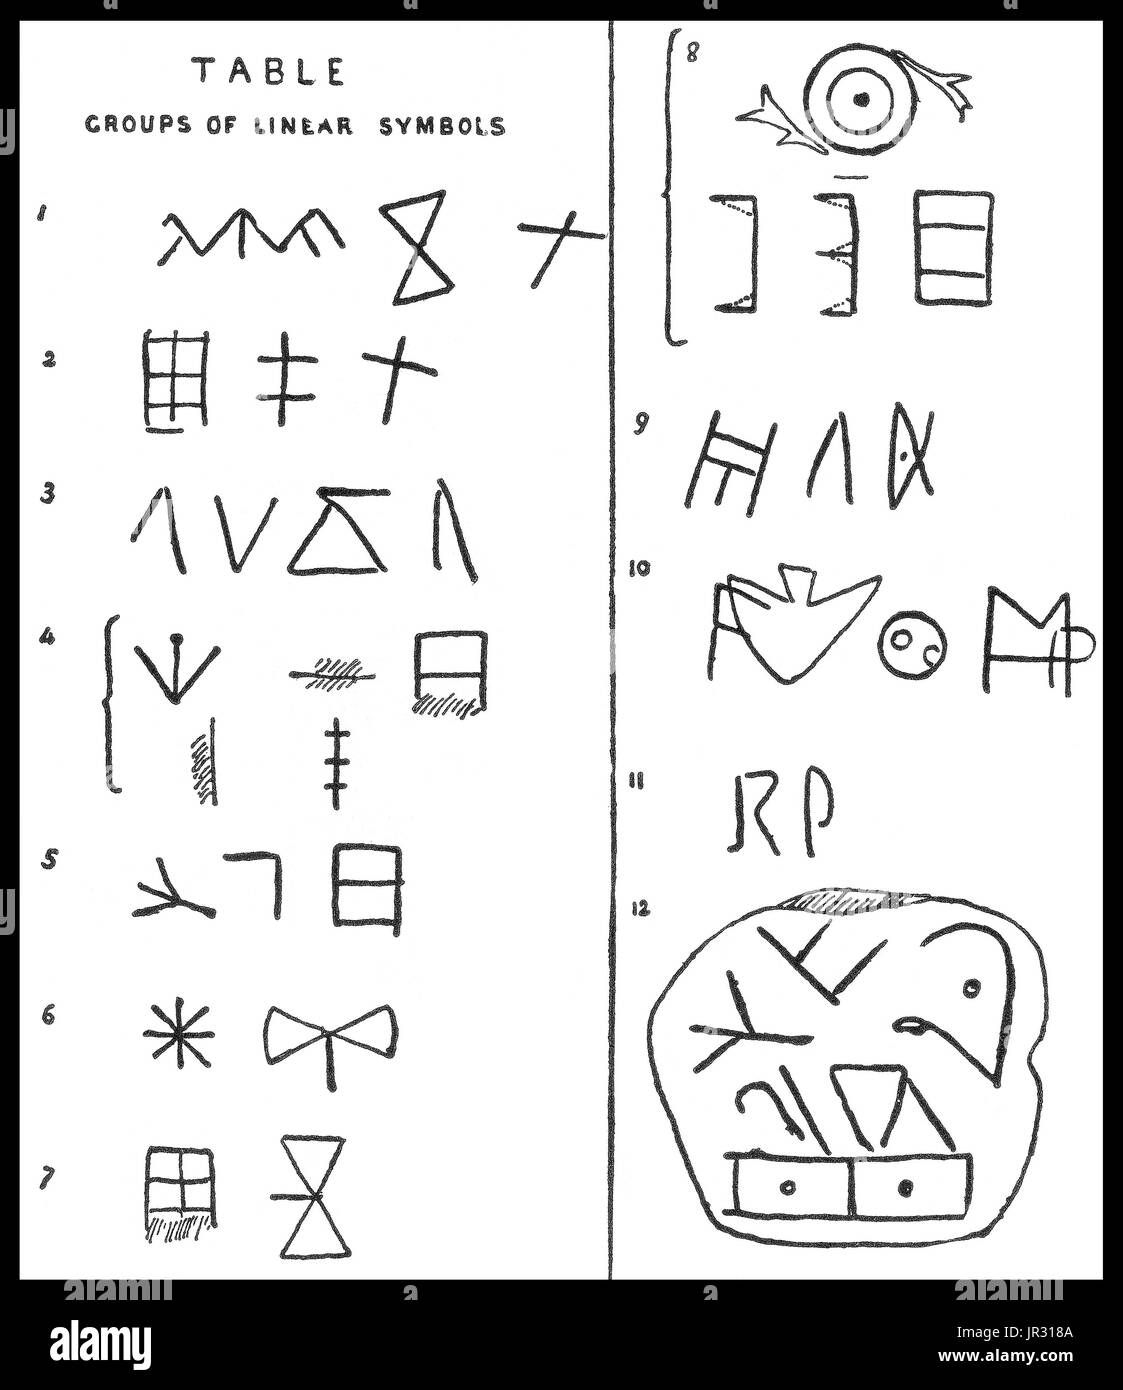 Image result for cretan hierogliphic axe